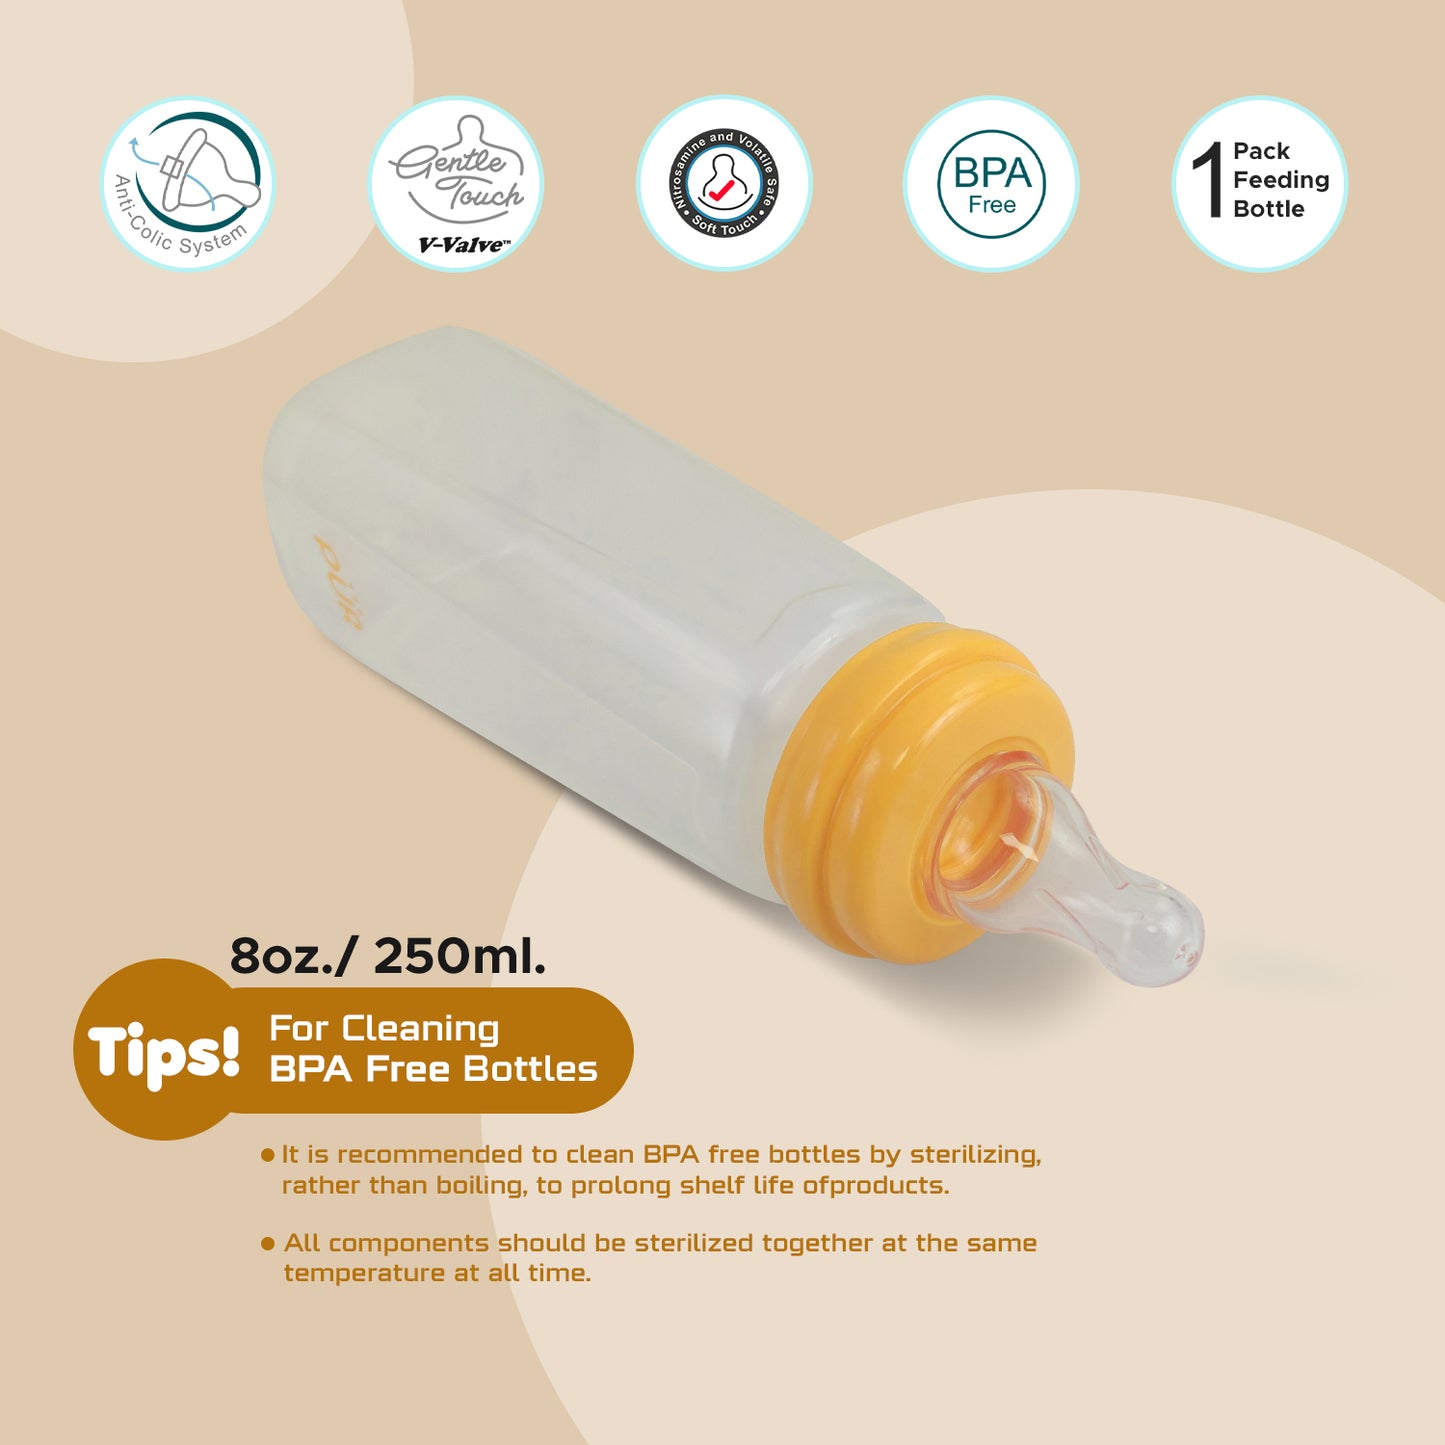 PUR 9027 Eco Feeding Bottle: BPA-Free, Ergonomic Design for Healthy Feeding (Choose Any Color)